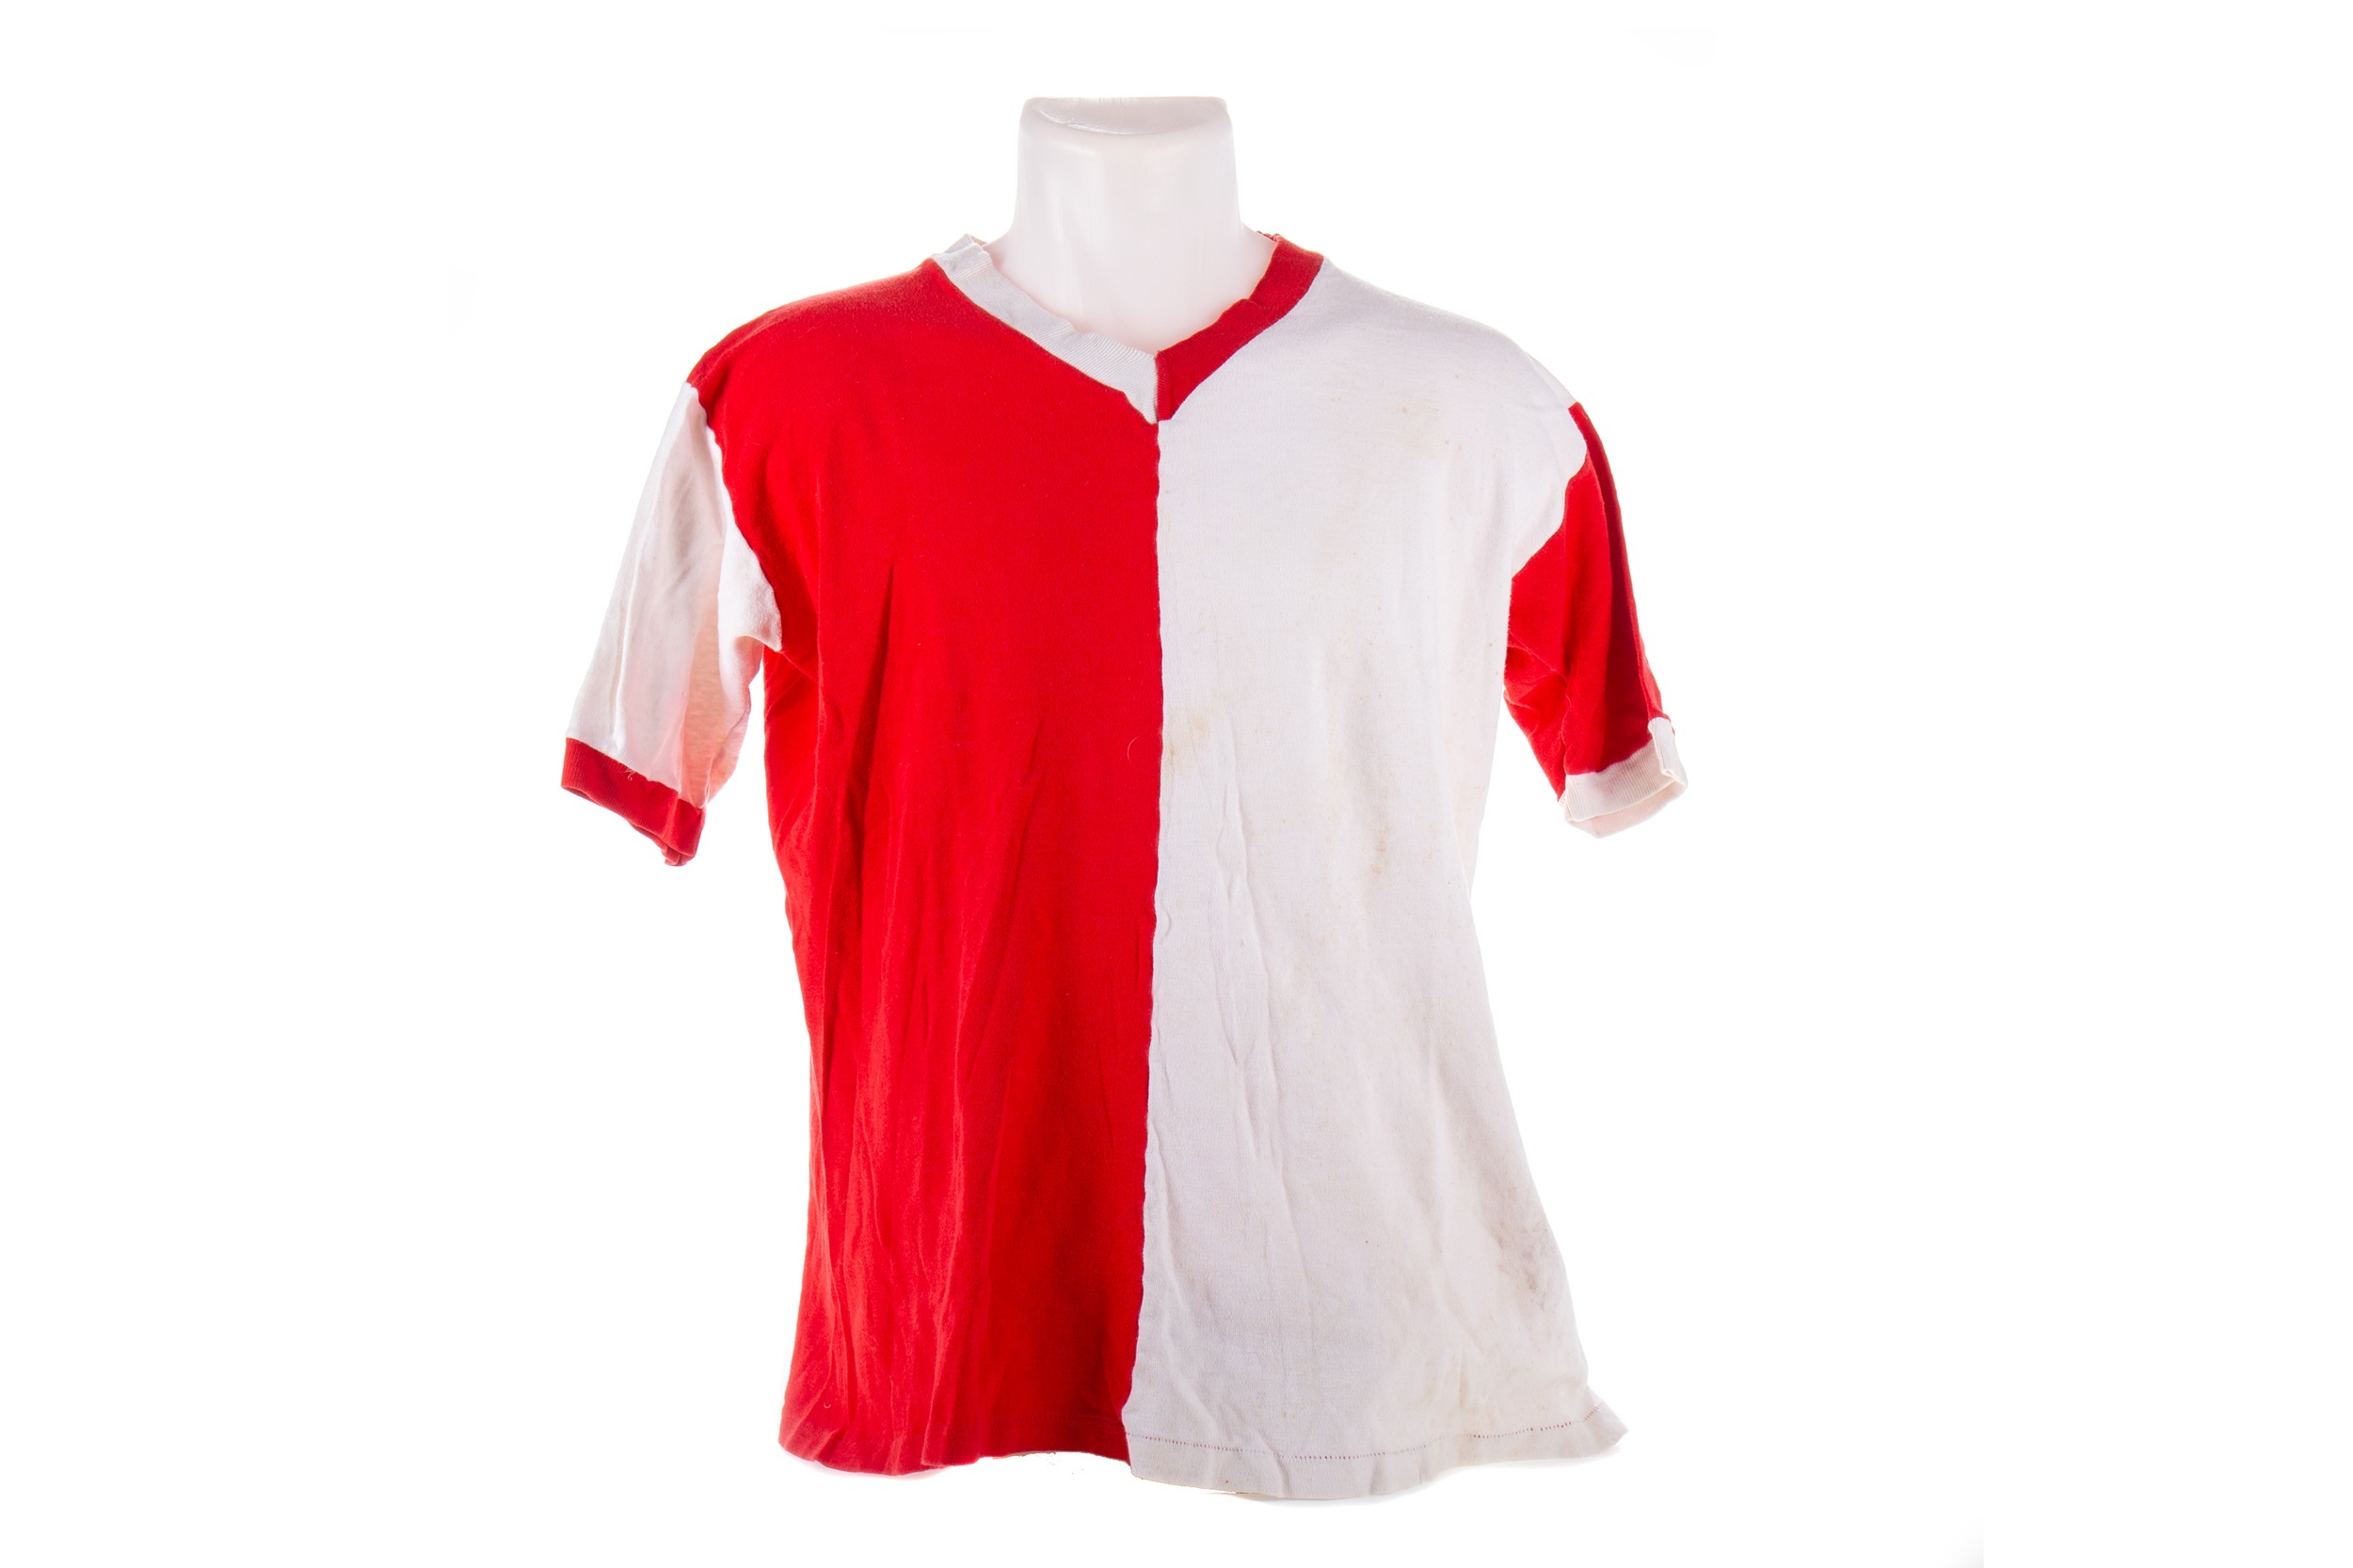 Vintage Celtic football shirts - Football Shirt Collective